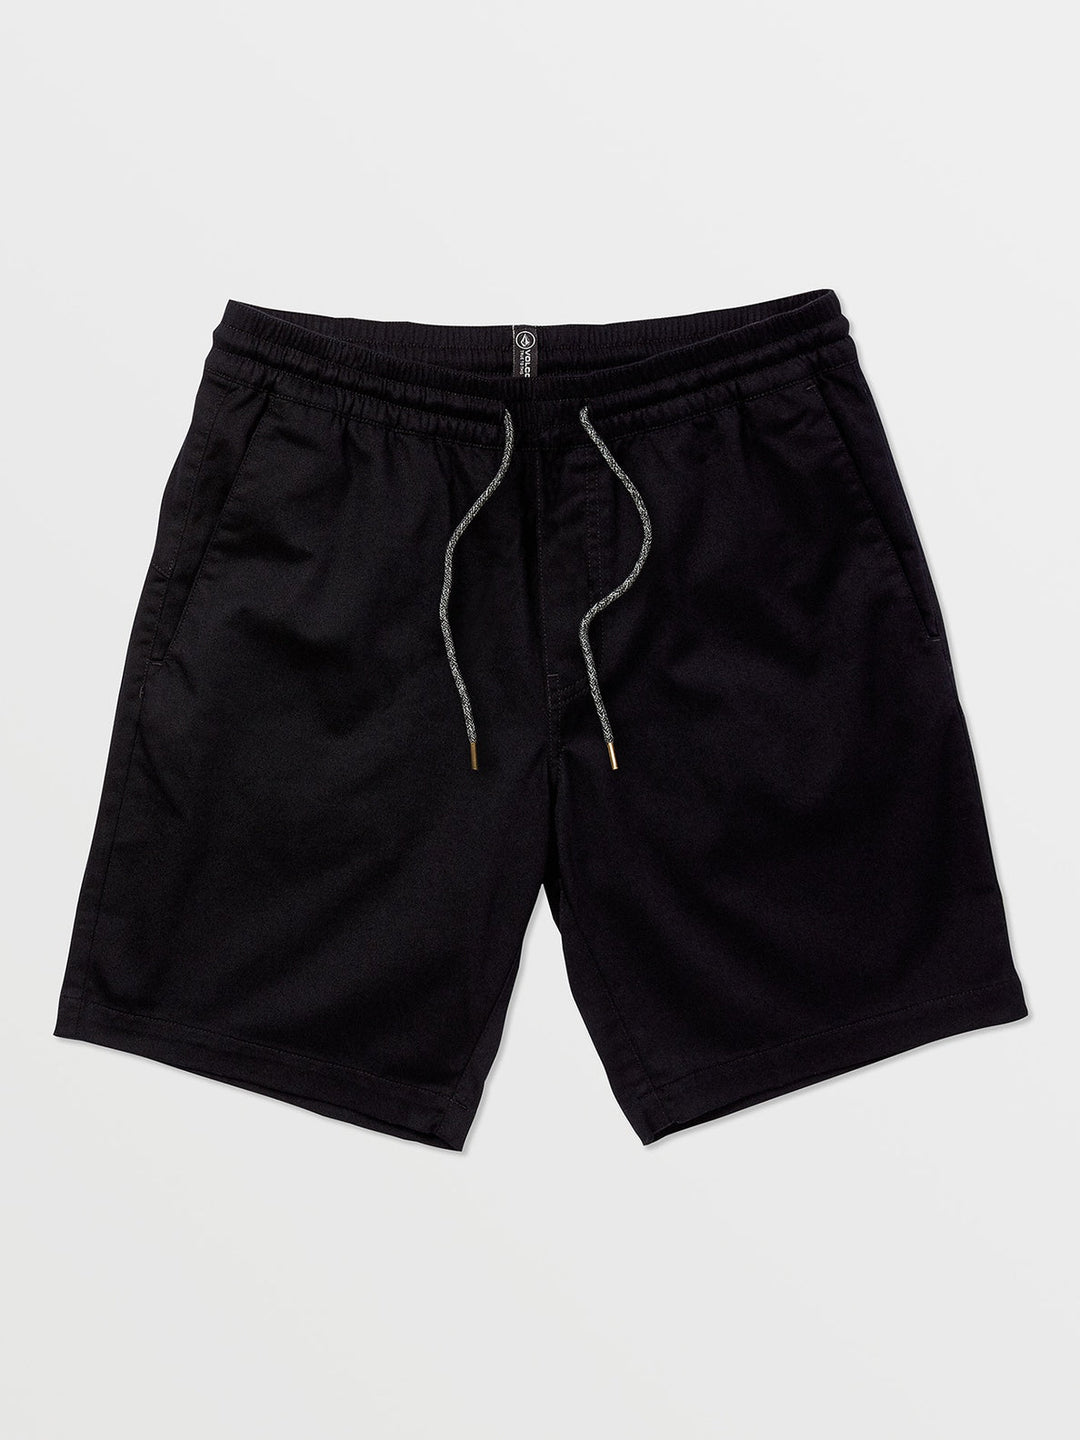 Volcom Frickin Elastic Waist Shorts - Black - Sun Diego Boardshop